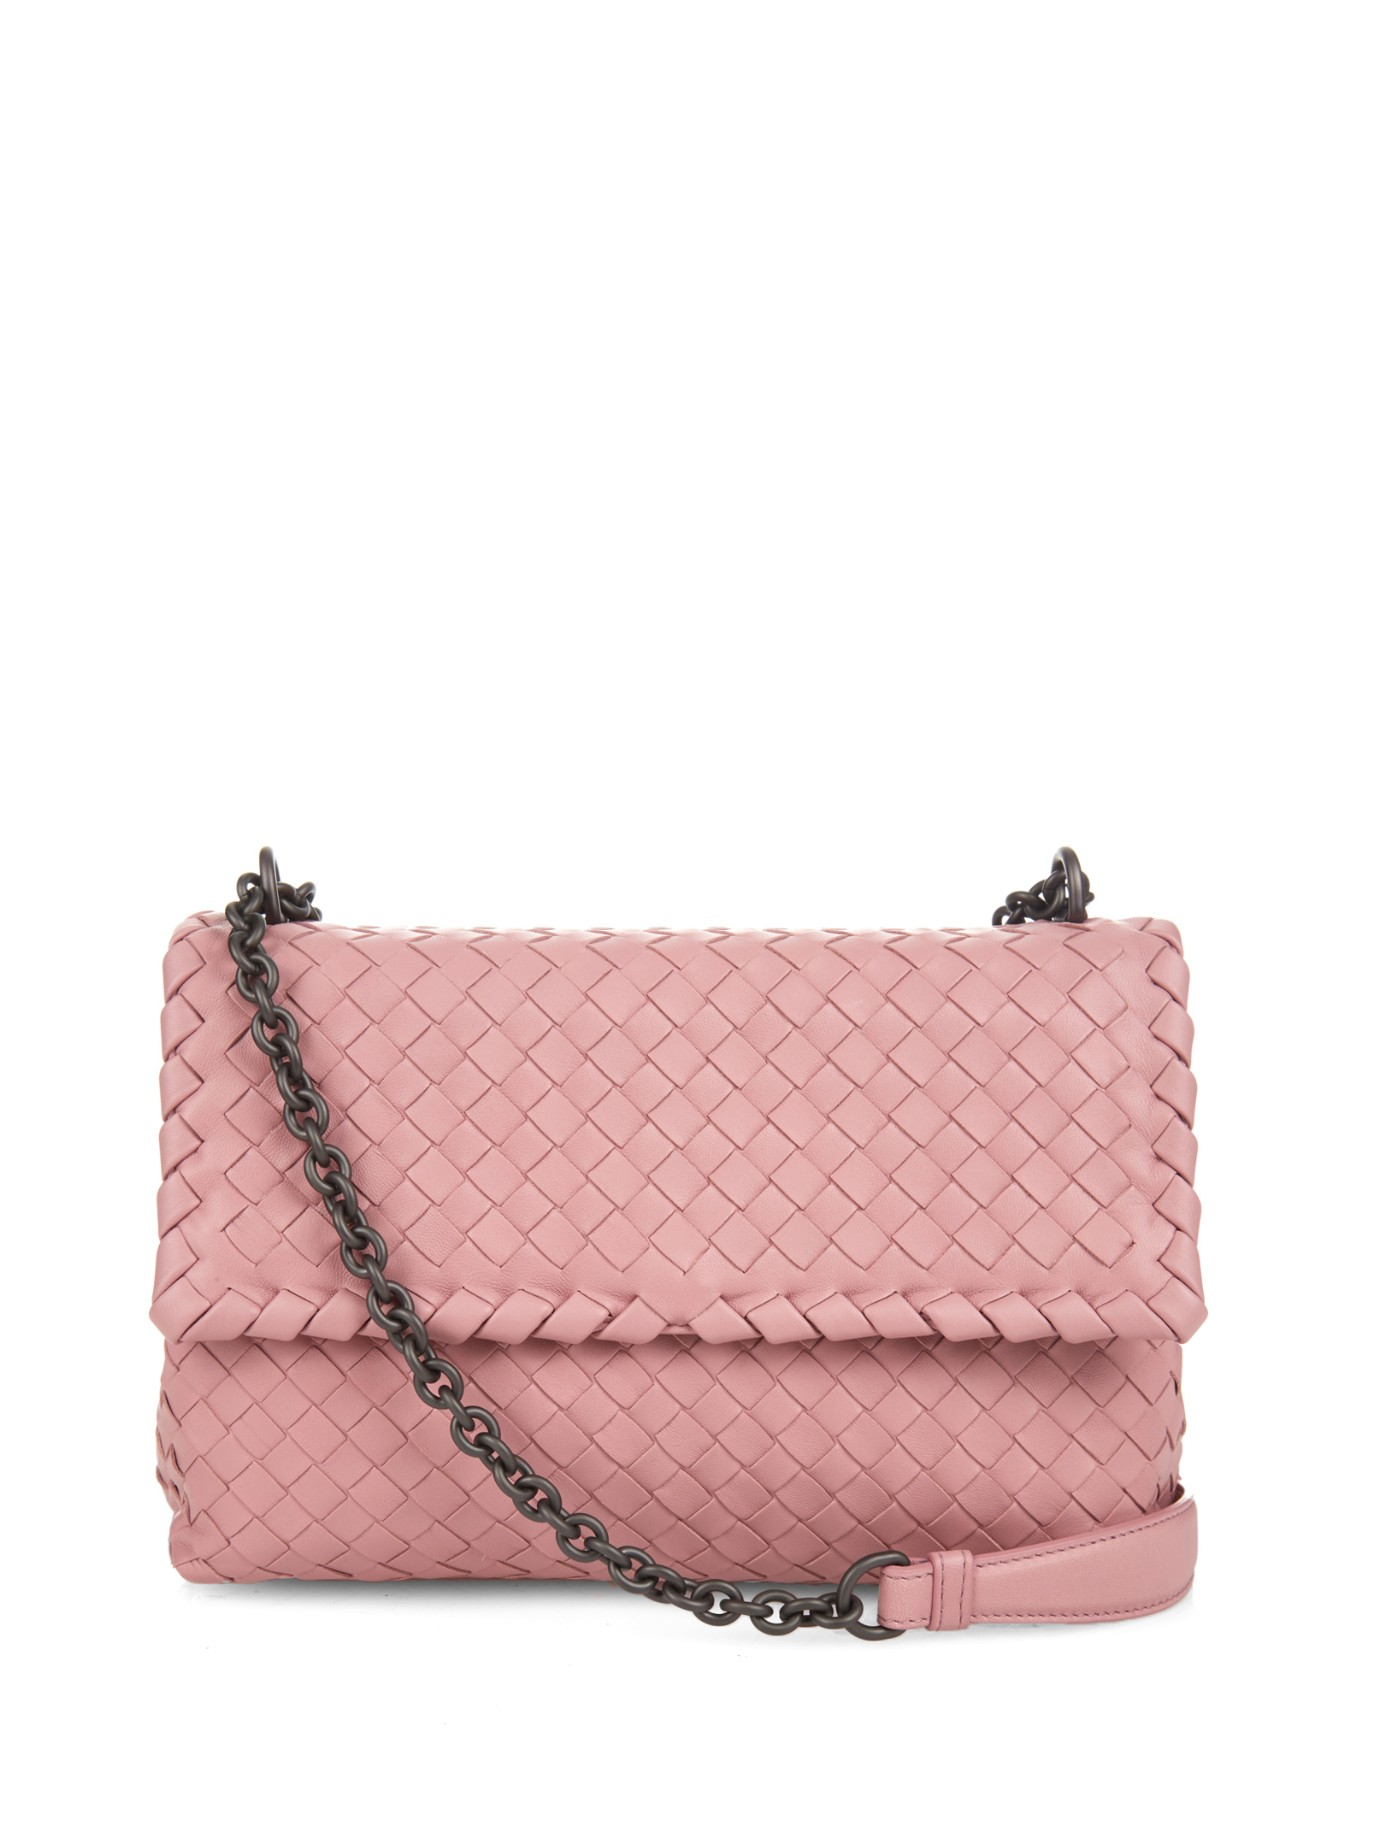 Bottega veneta Olimpia Small Intrecciato Leather Shoulder Bag in Pink ...